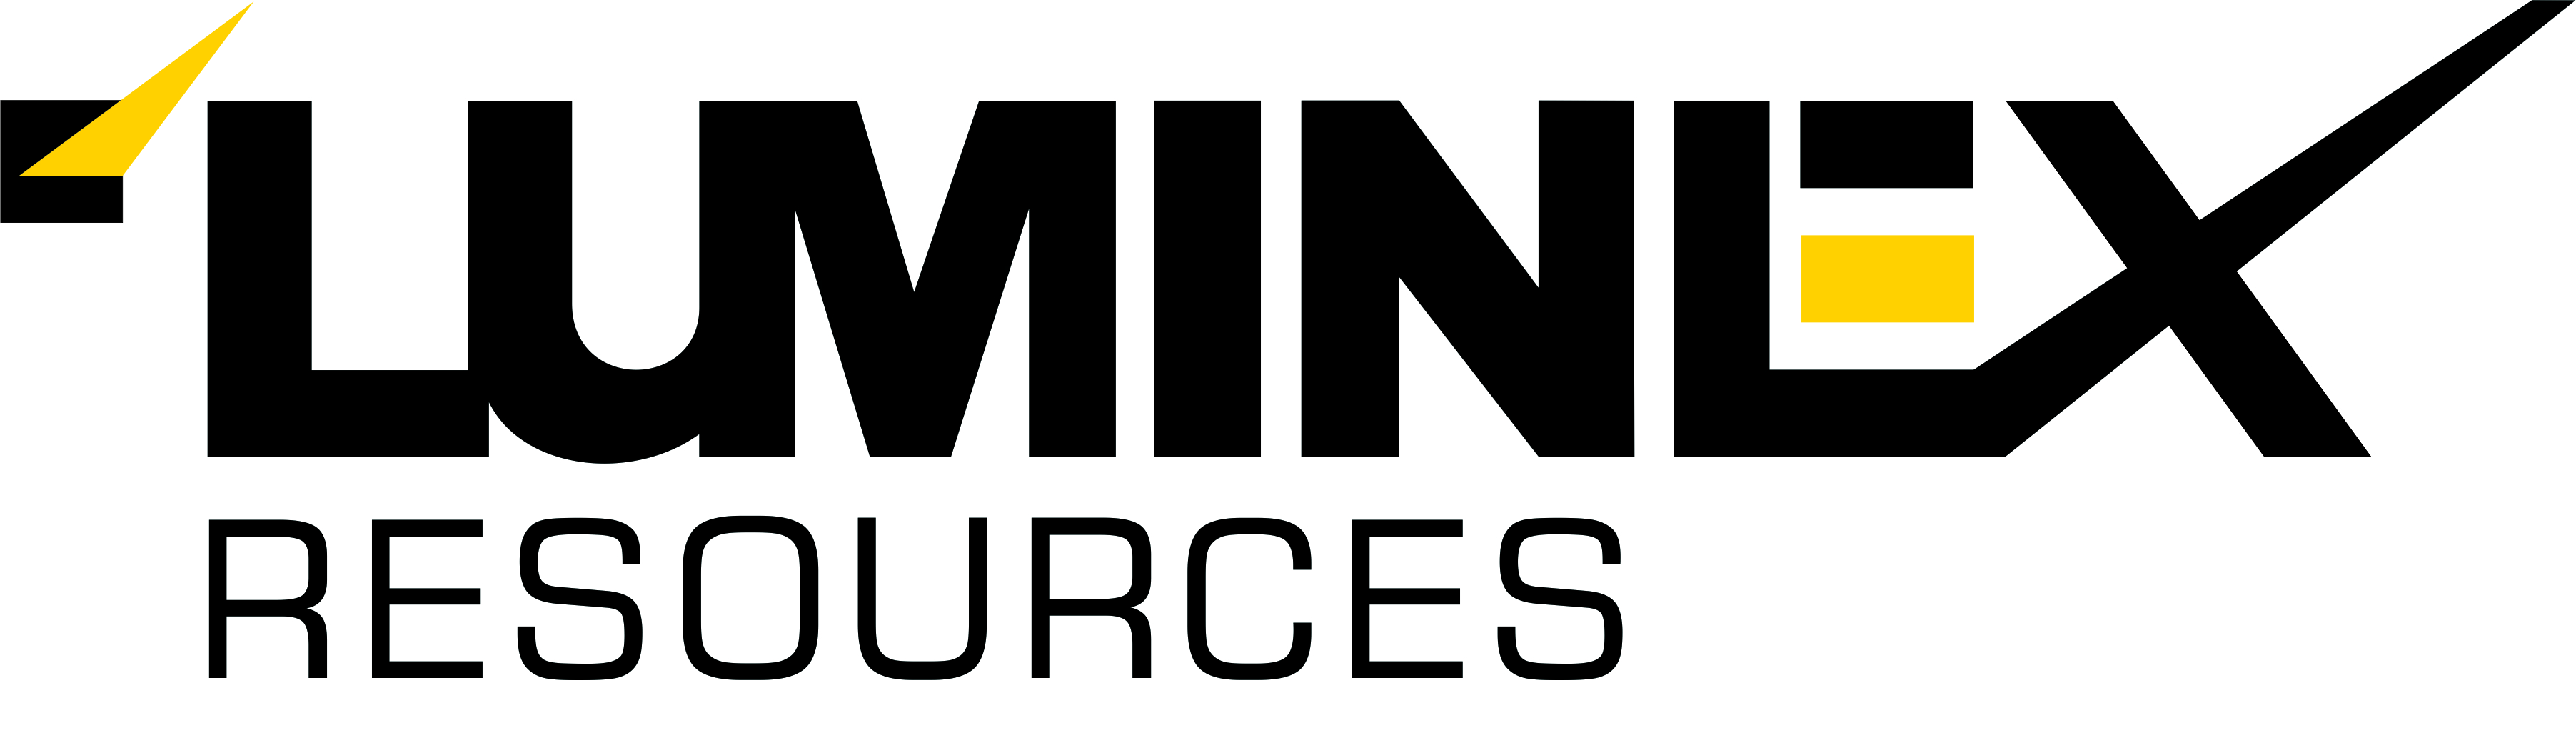 LUMINEX_logo_FINAL.jpg